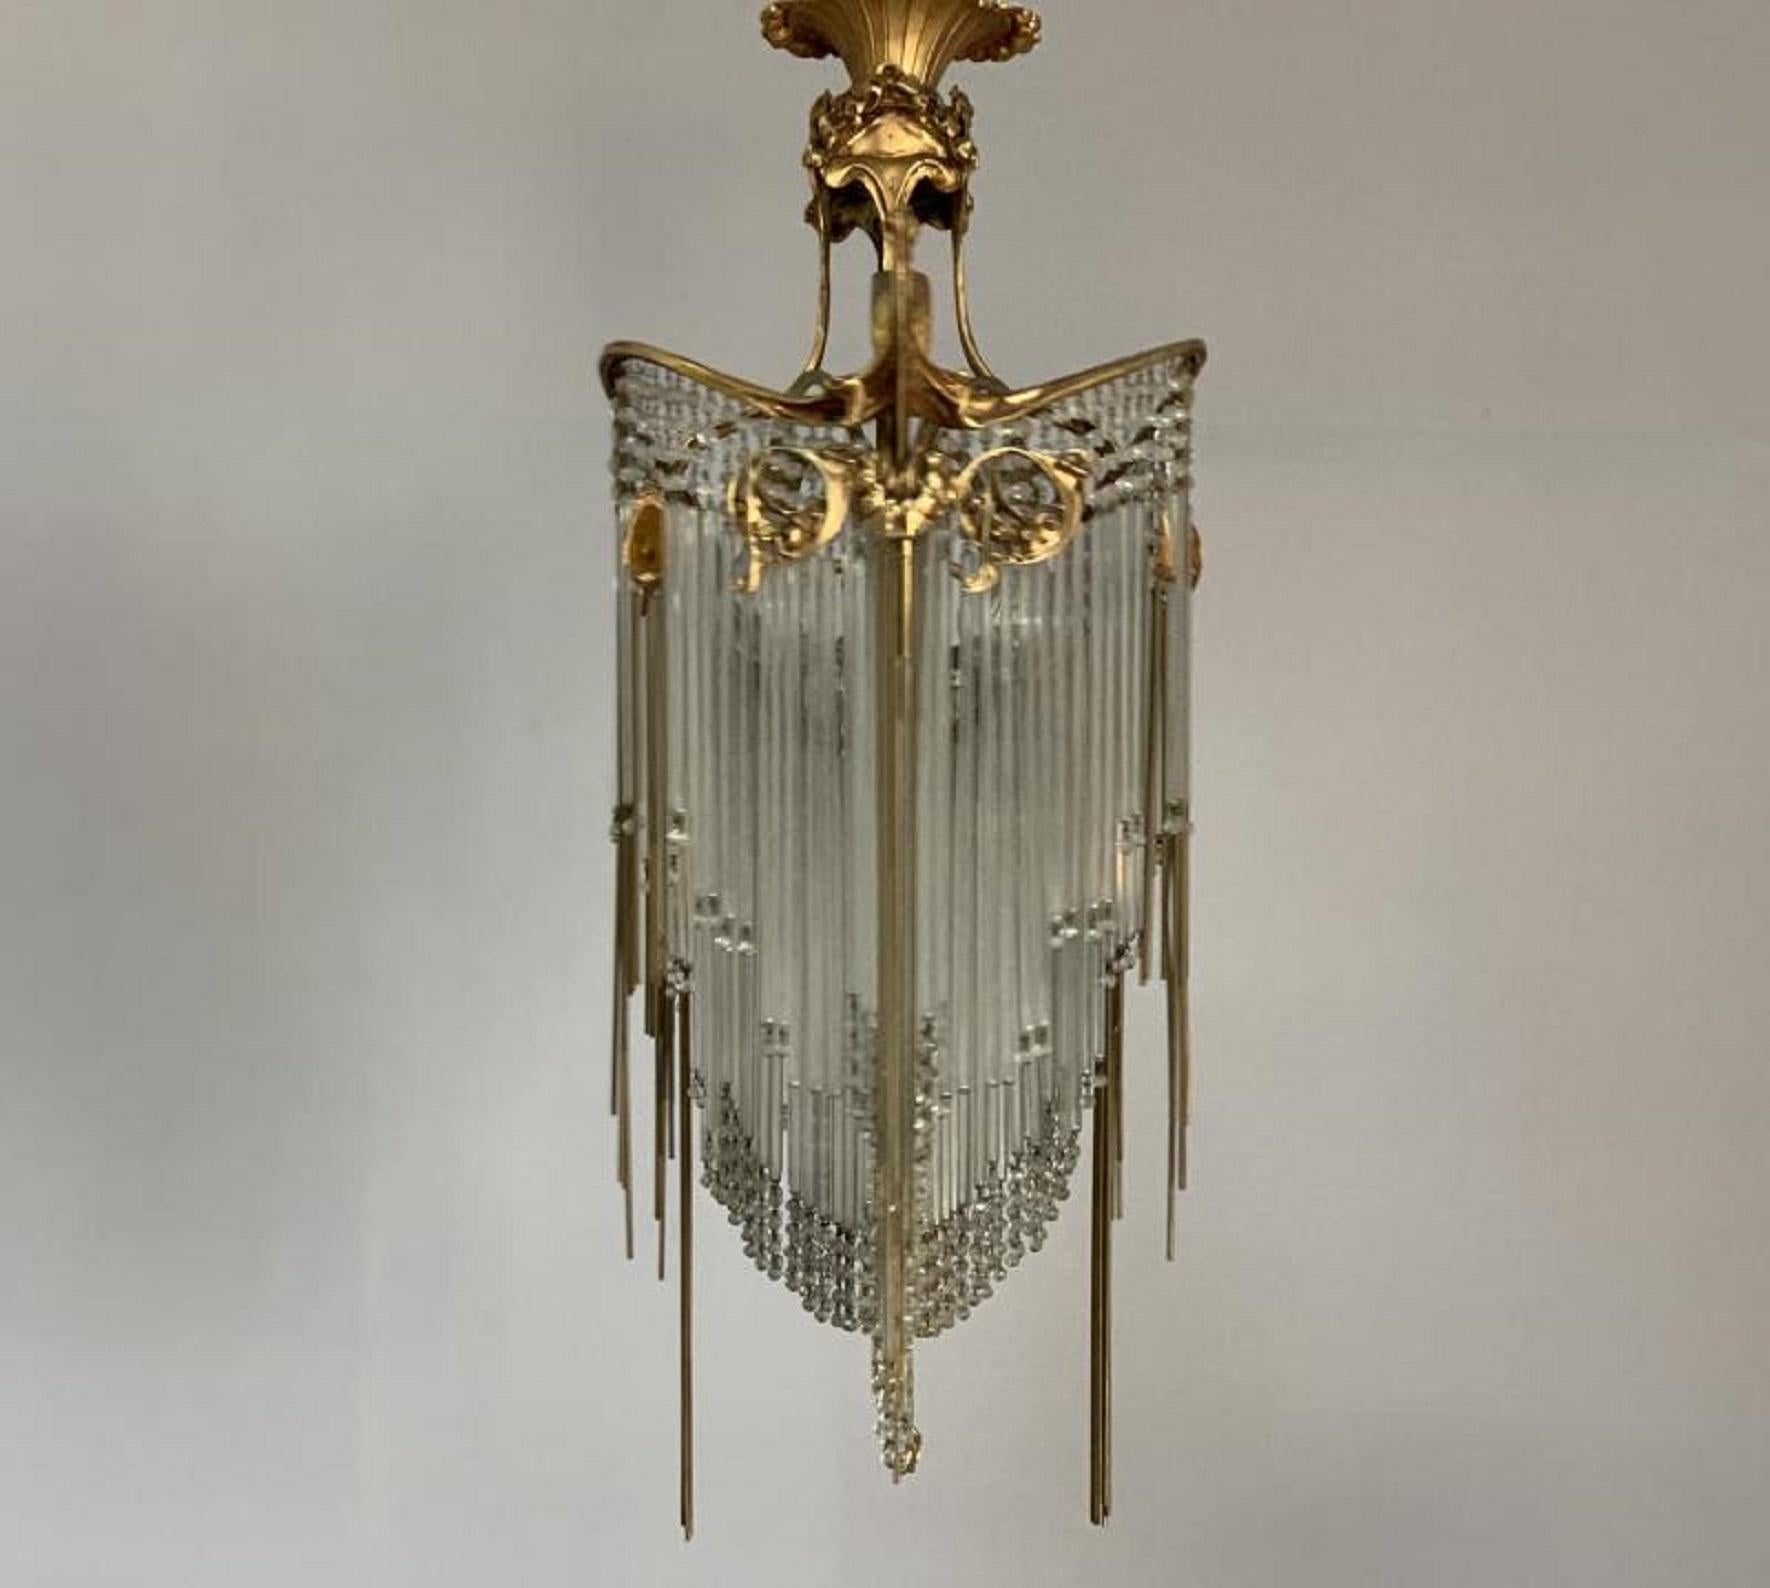 Art Nouveau chandelier in style of Hector Guimard.